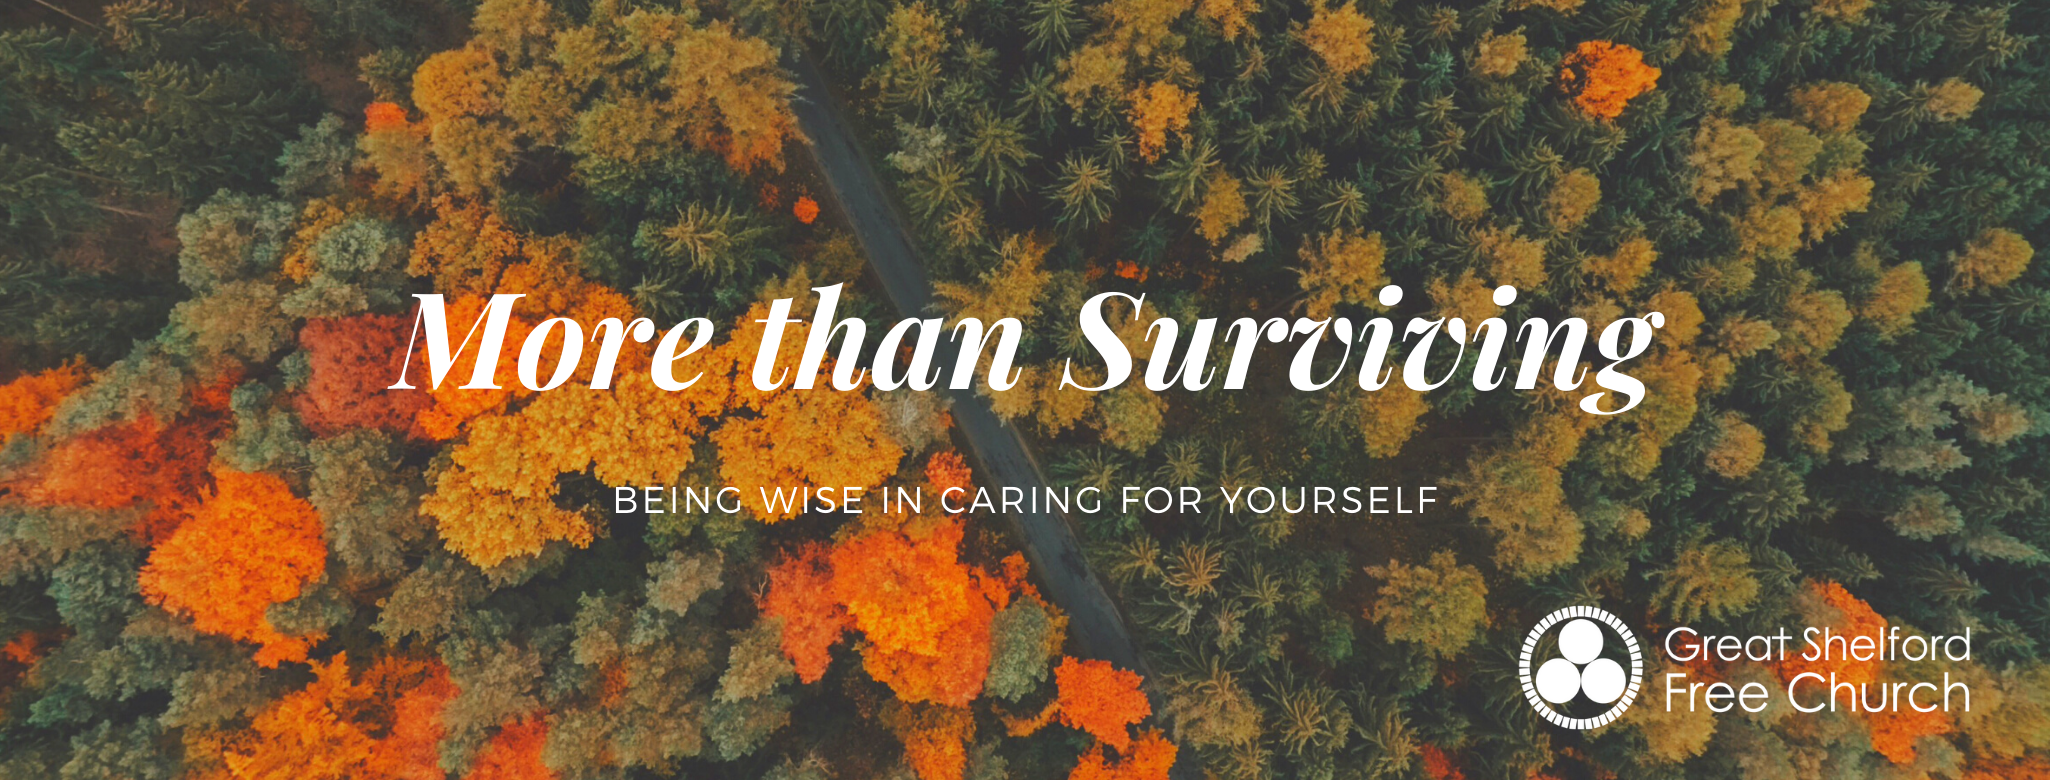 More than Surviving